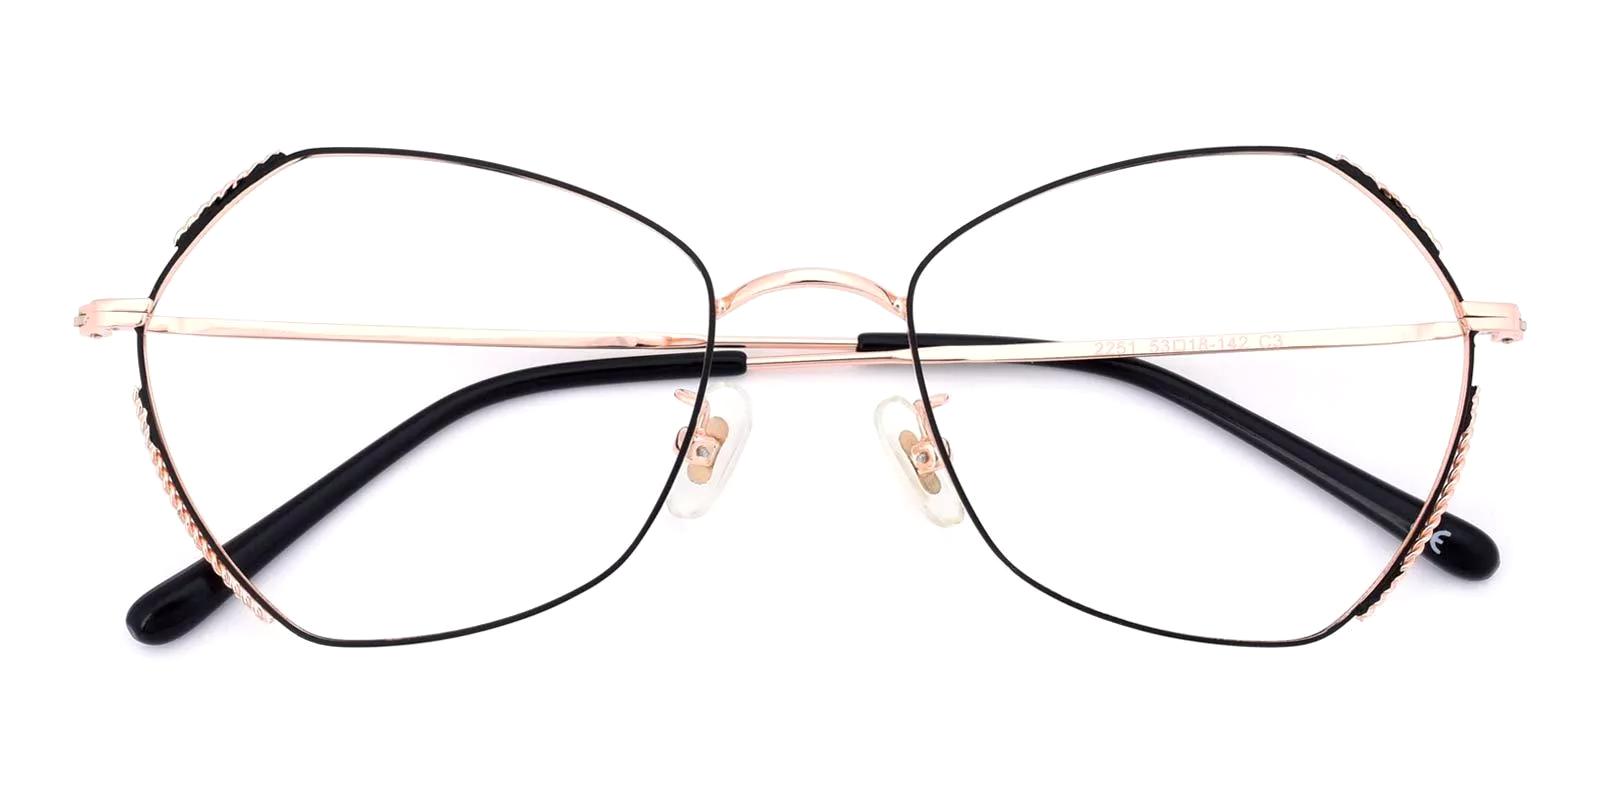 Dontic Gold Metal Eyeglasses , NosePads Frames from ABBE Glasses